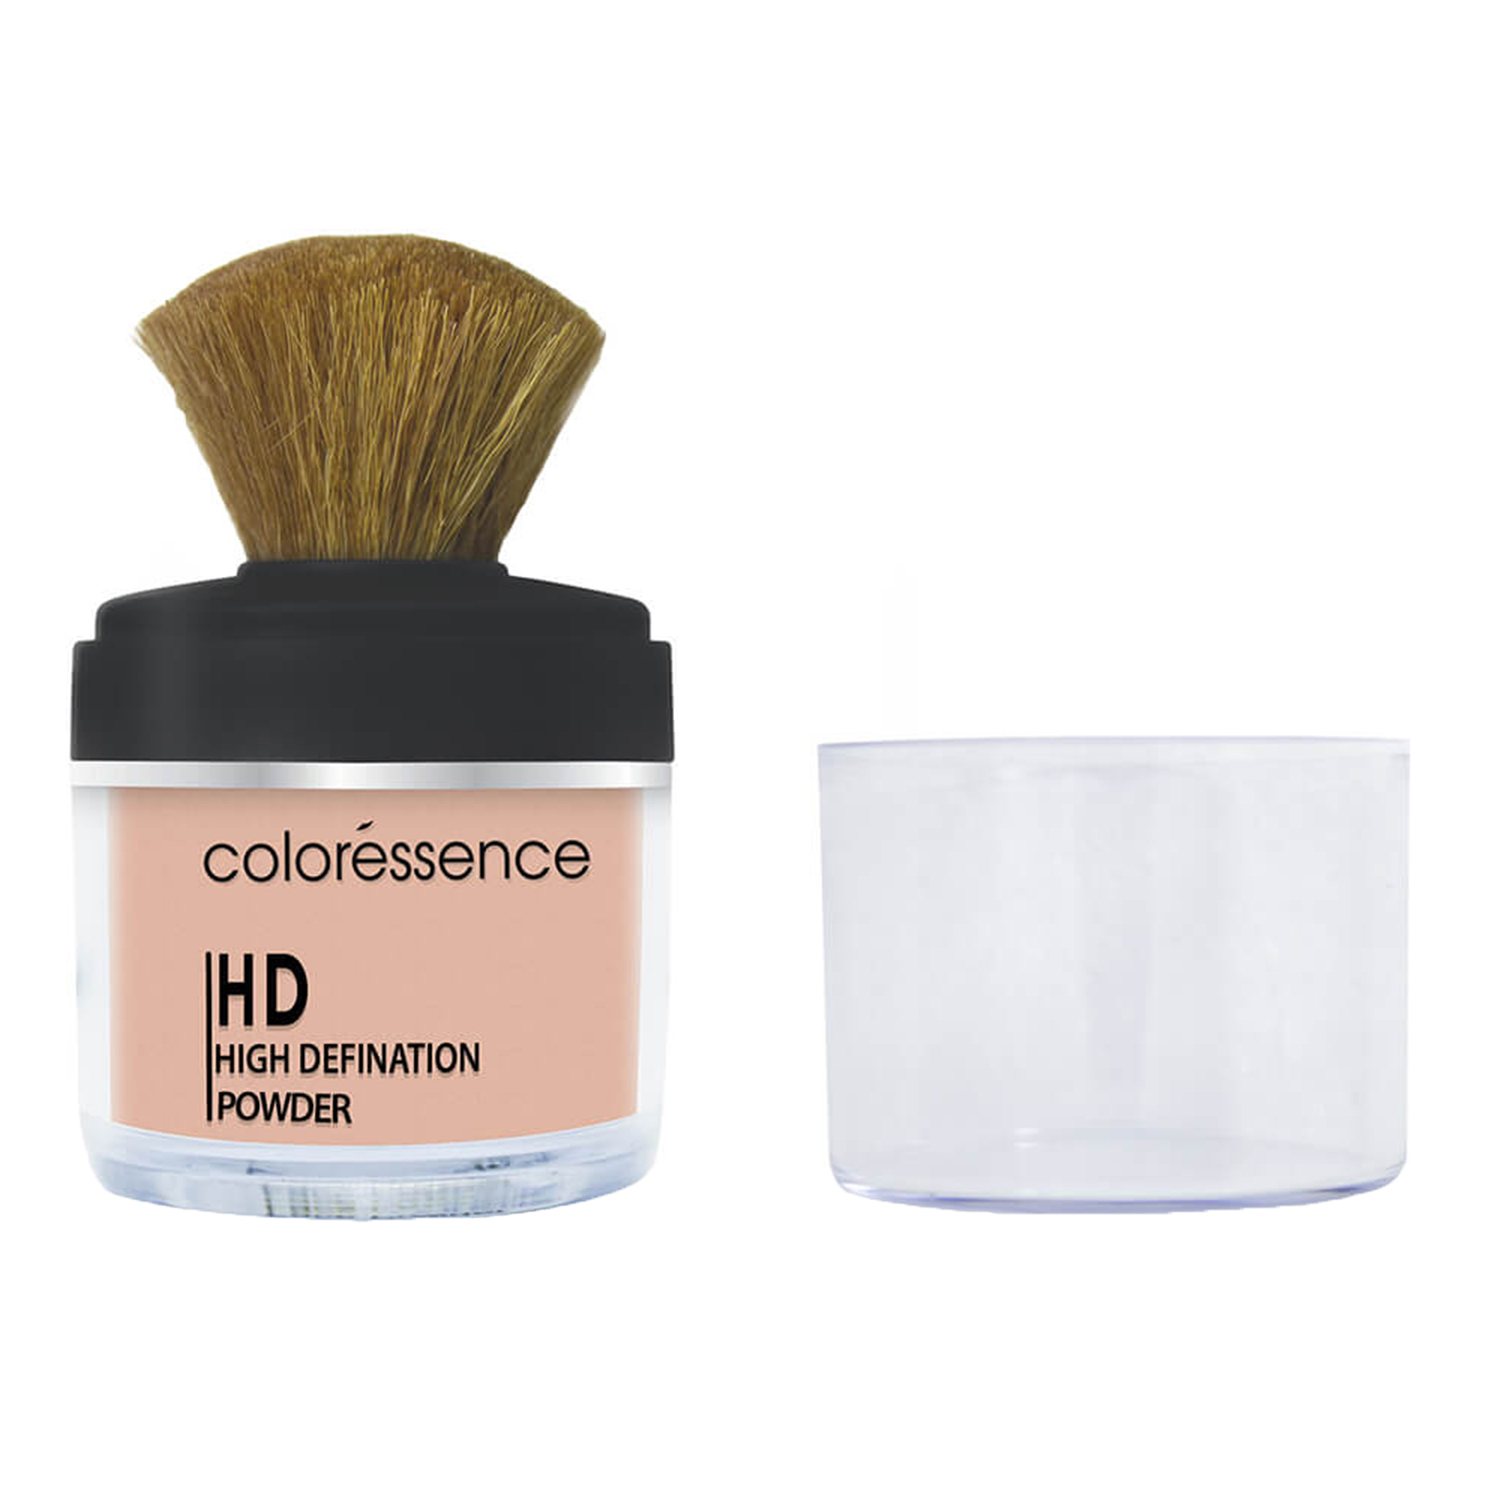 Coloressence High Definition Loose Powder Soft Focus Natural Translucent Coverage, 10gm-Dusky